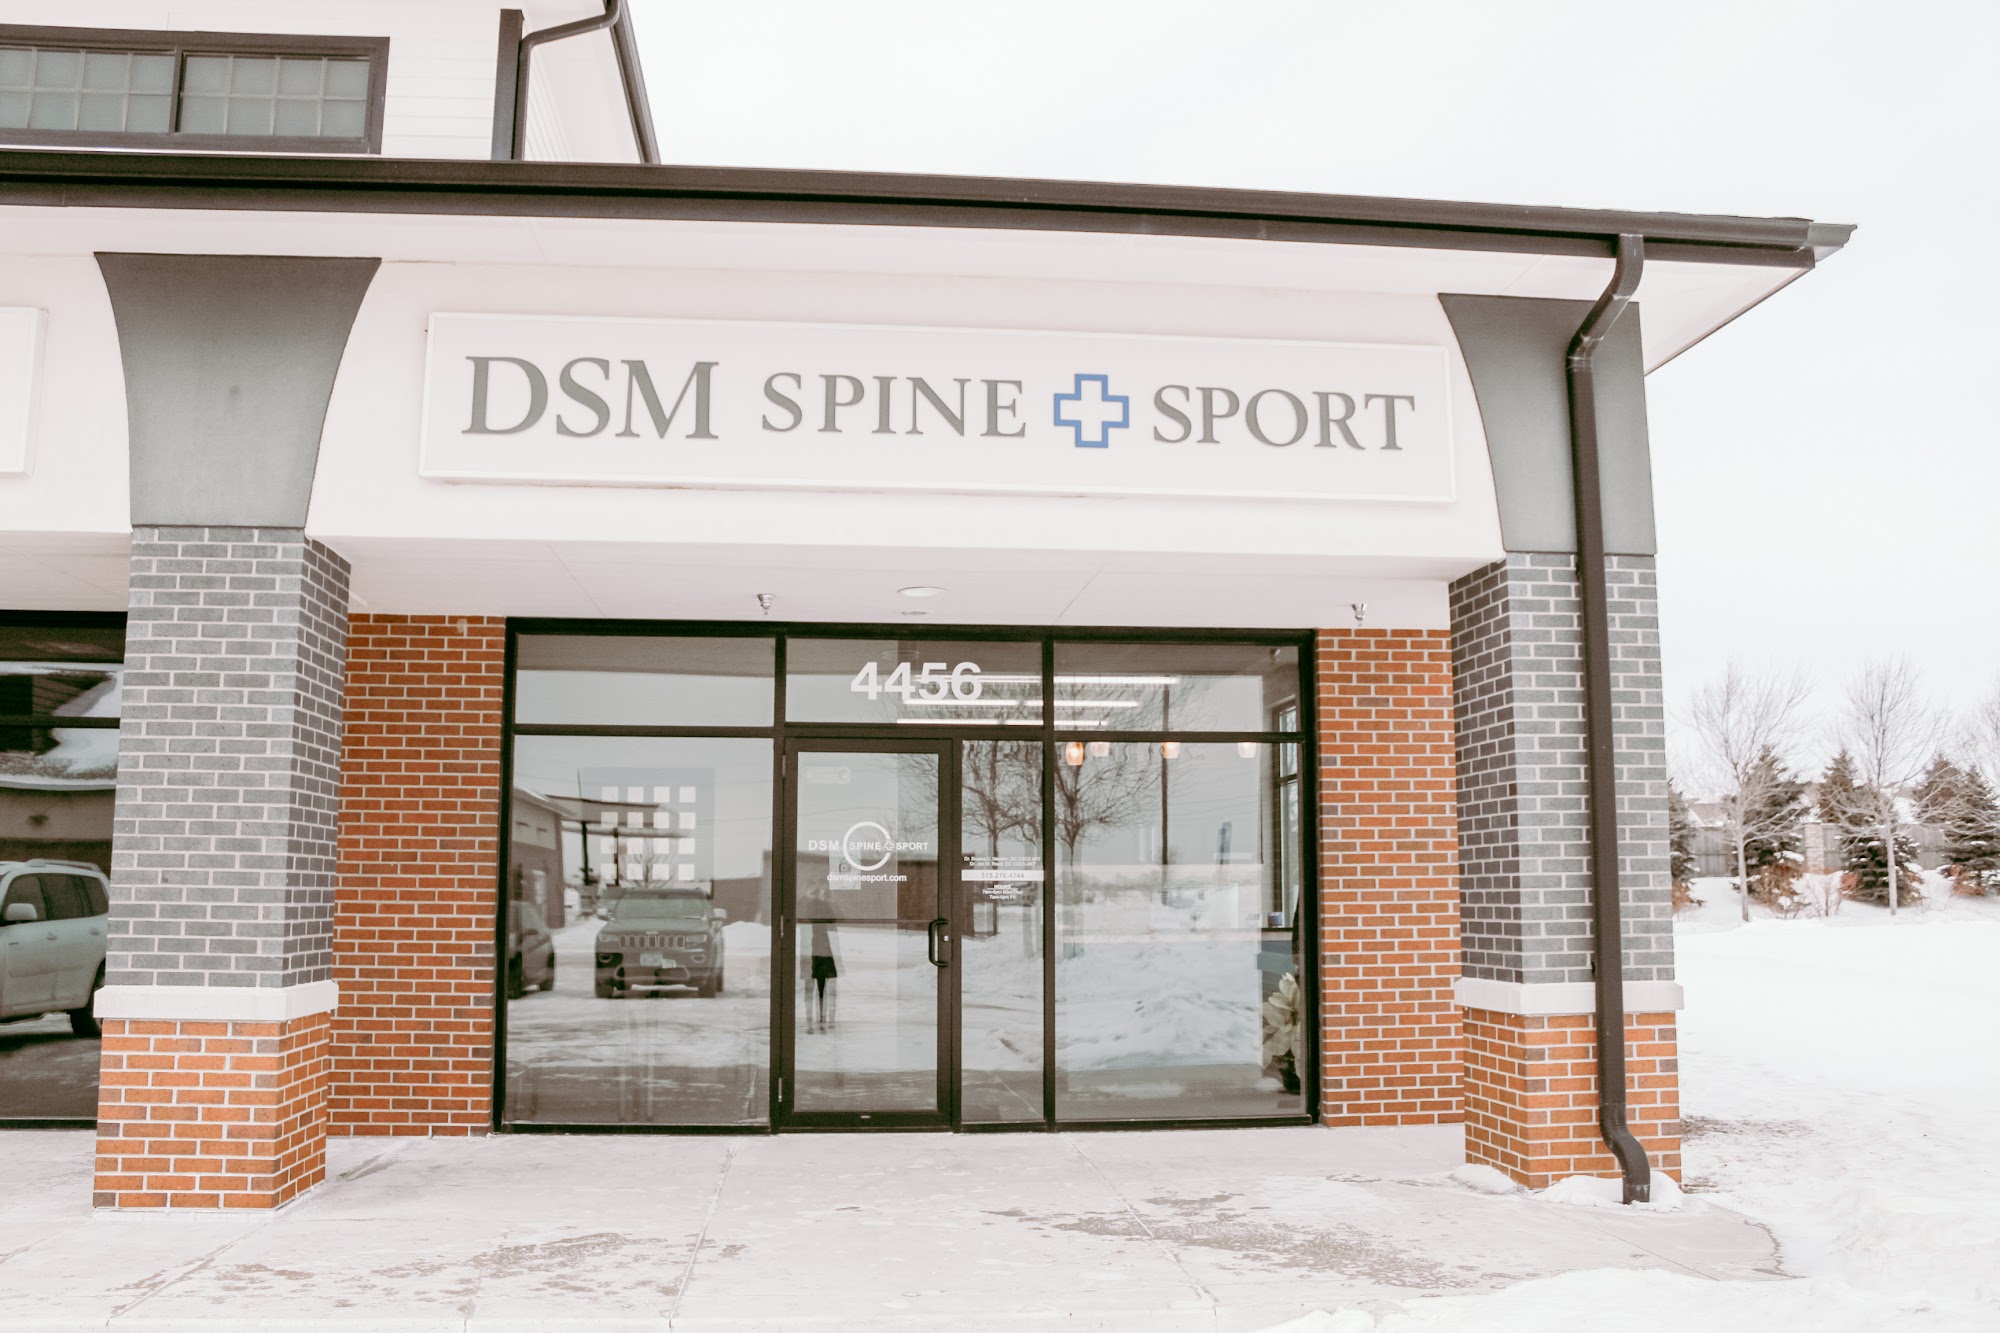 DSM Spine + Sport